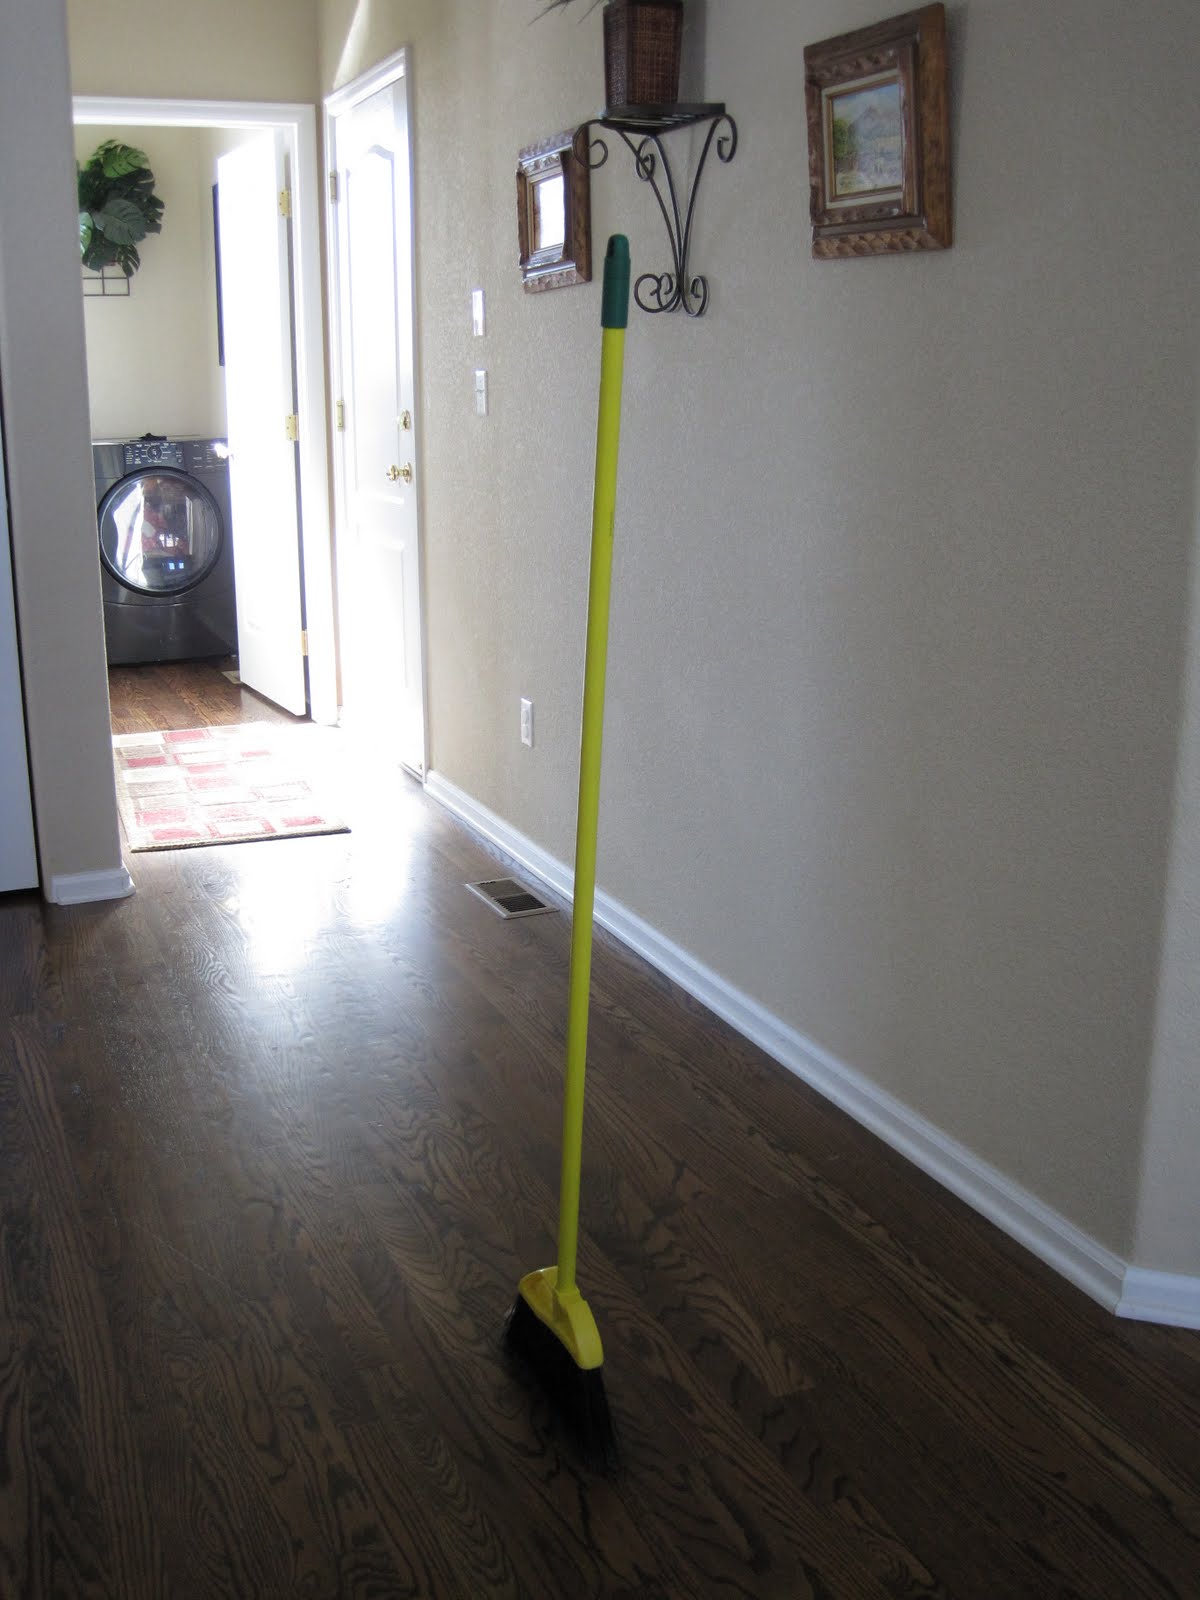 Magical Anti-Gravity Broom! - Confessions of a Homeschooler1200 x 1600